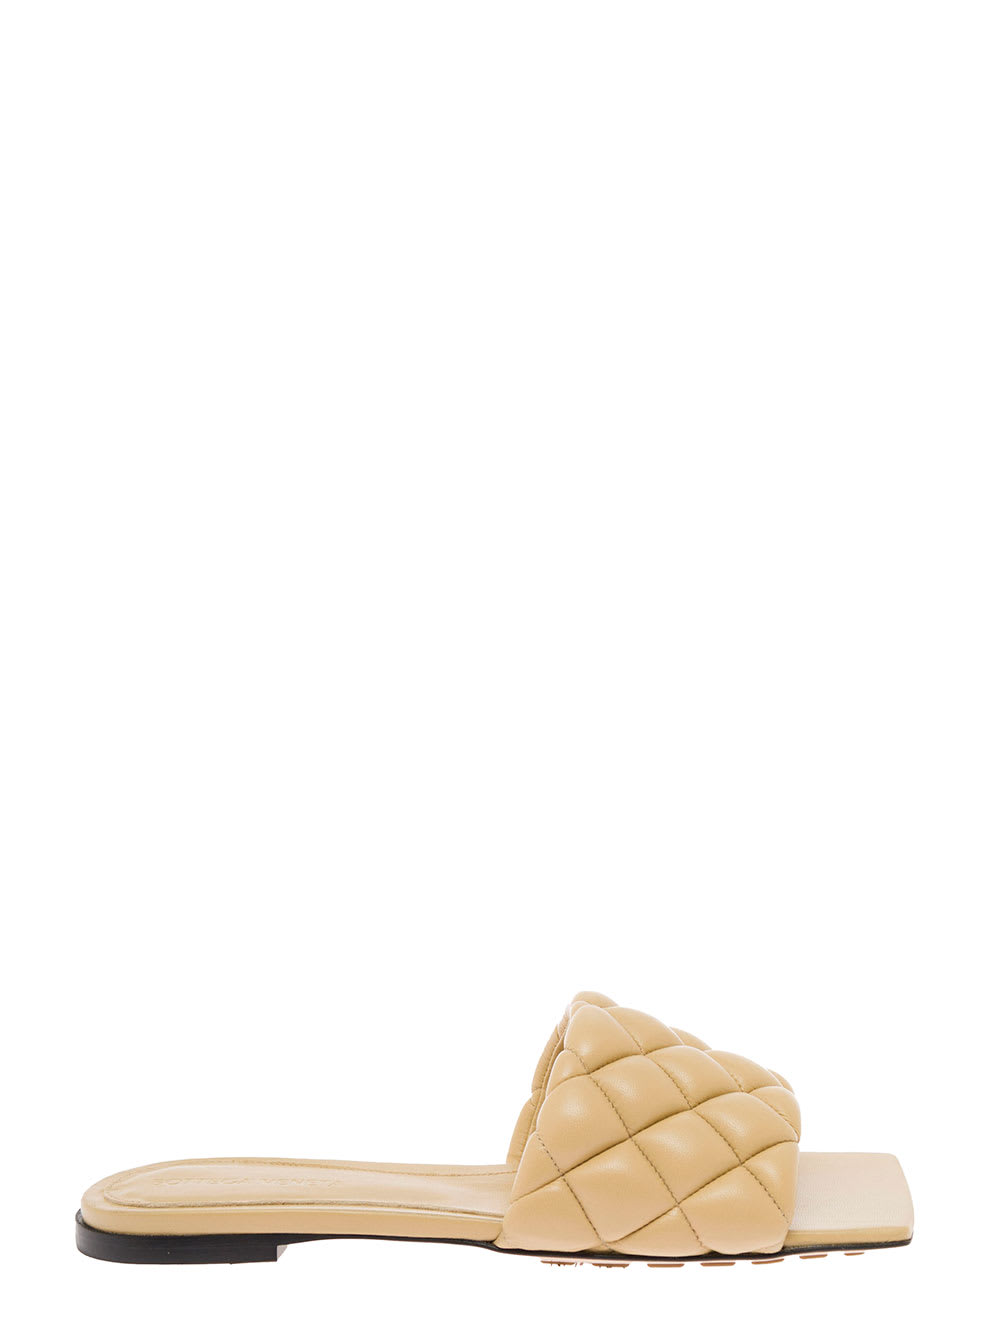 Beige Quilted Leather Slide Sandals Bottega Veneta Woman